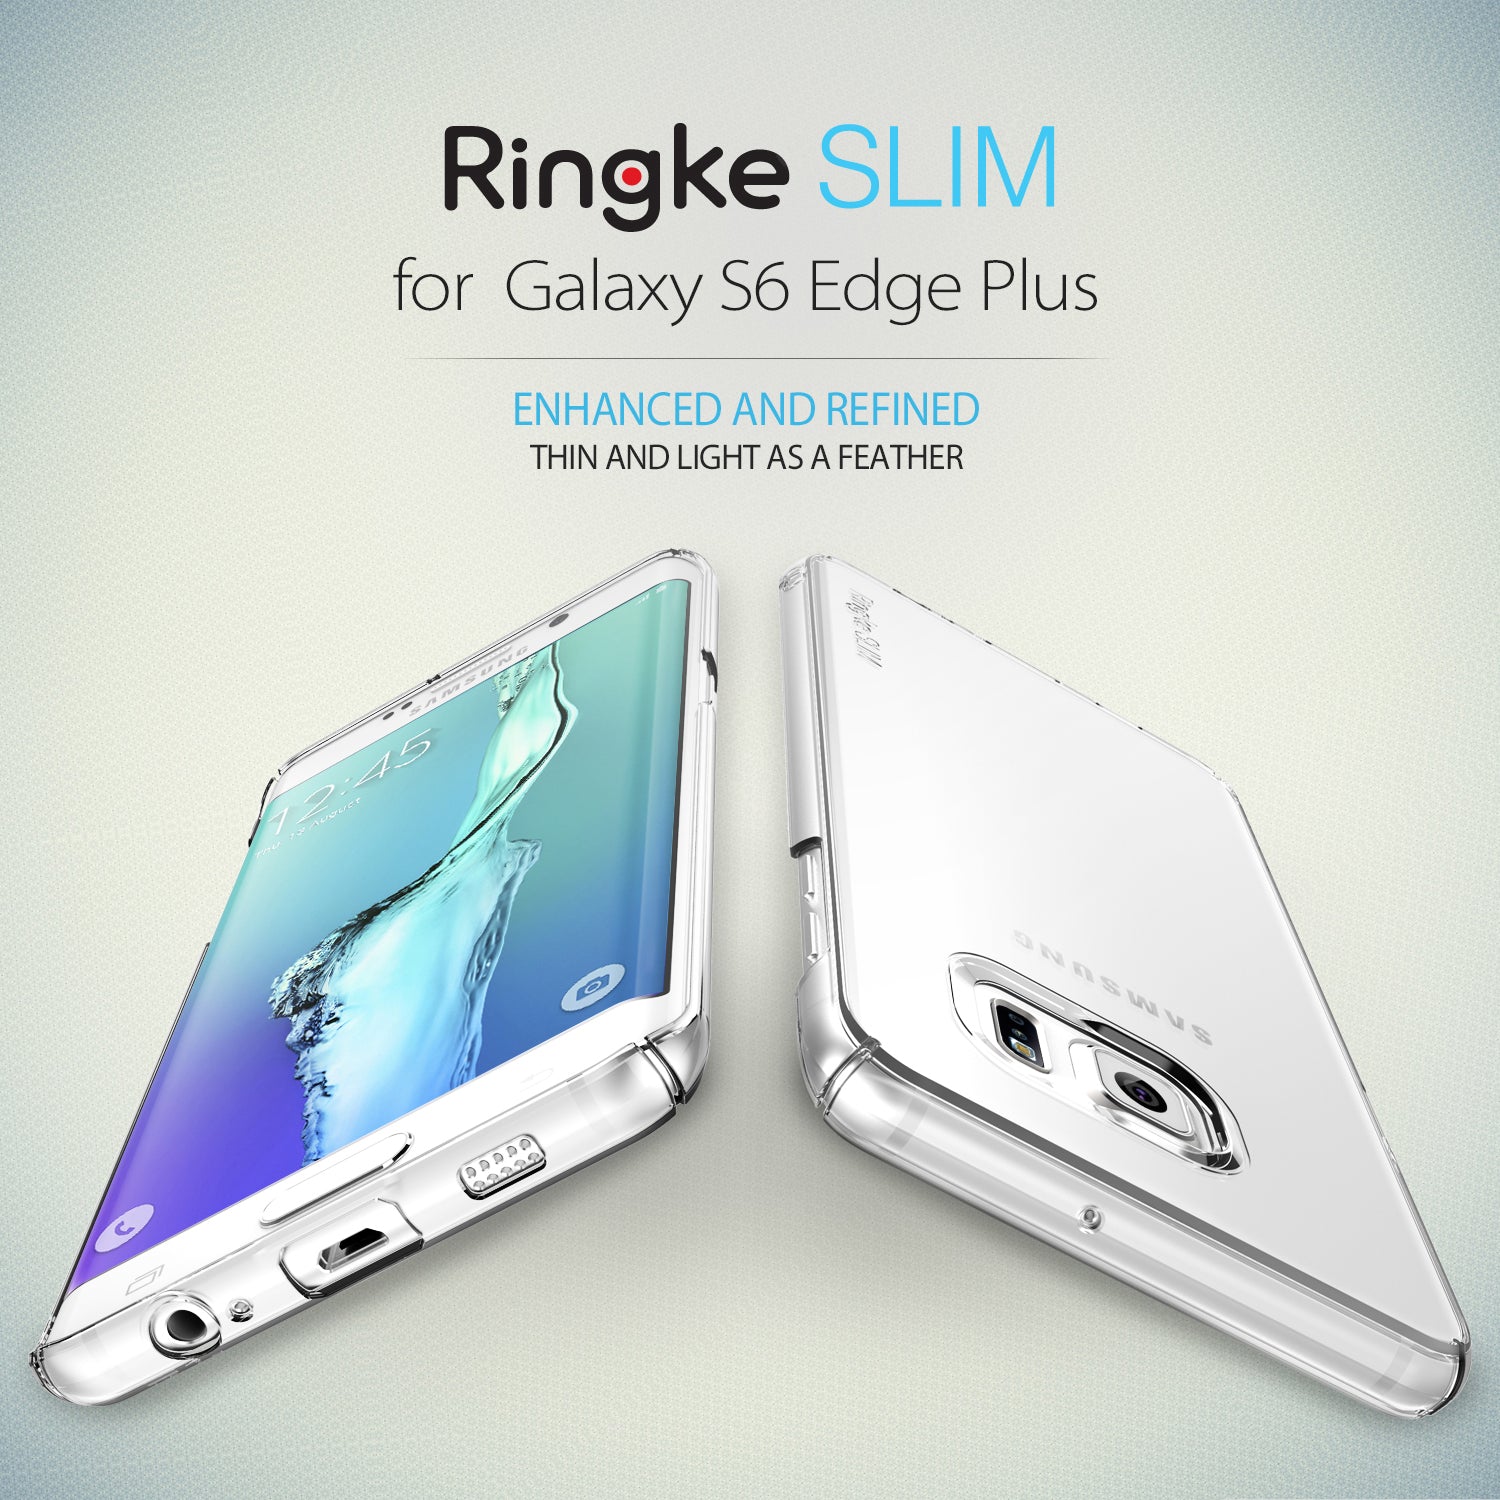 ringke slim premium thin hard pc lightweight cover case for galaxy s6 edge plus